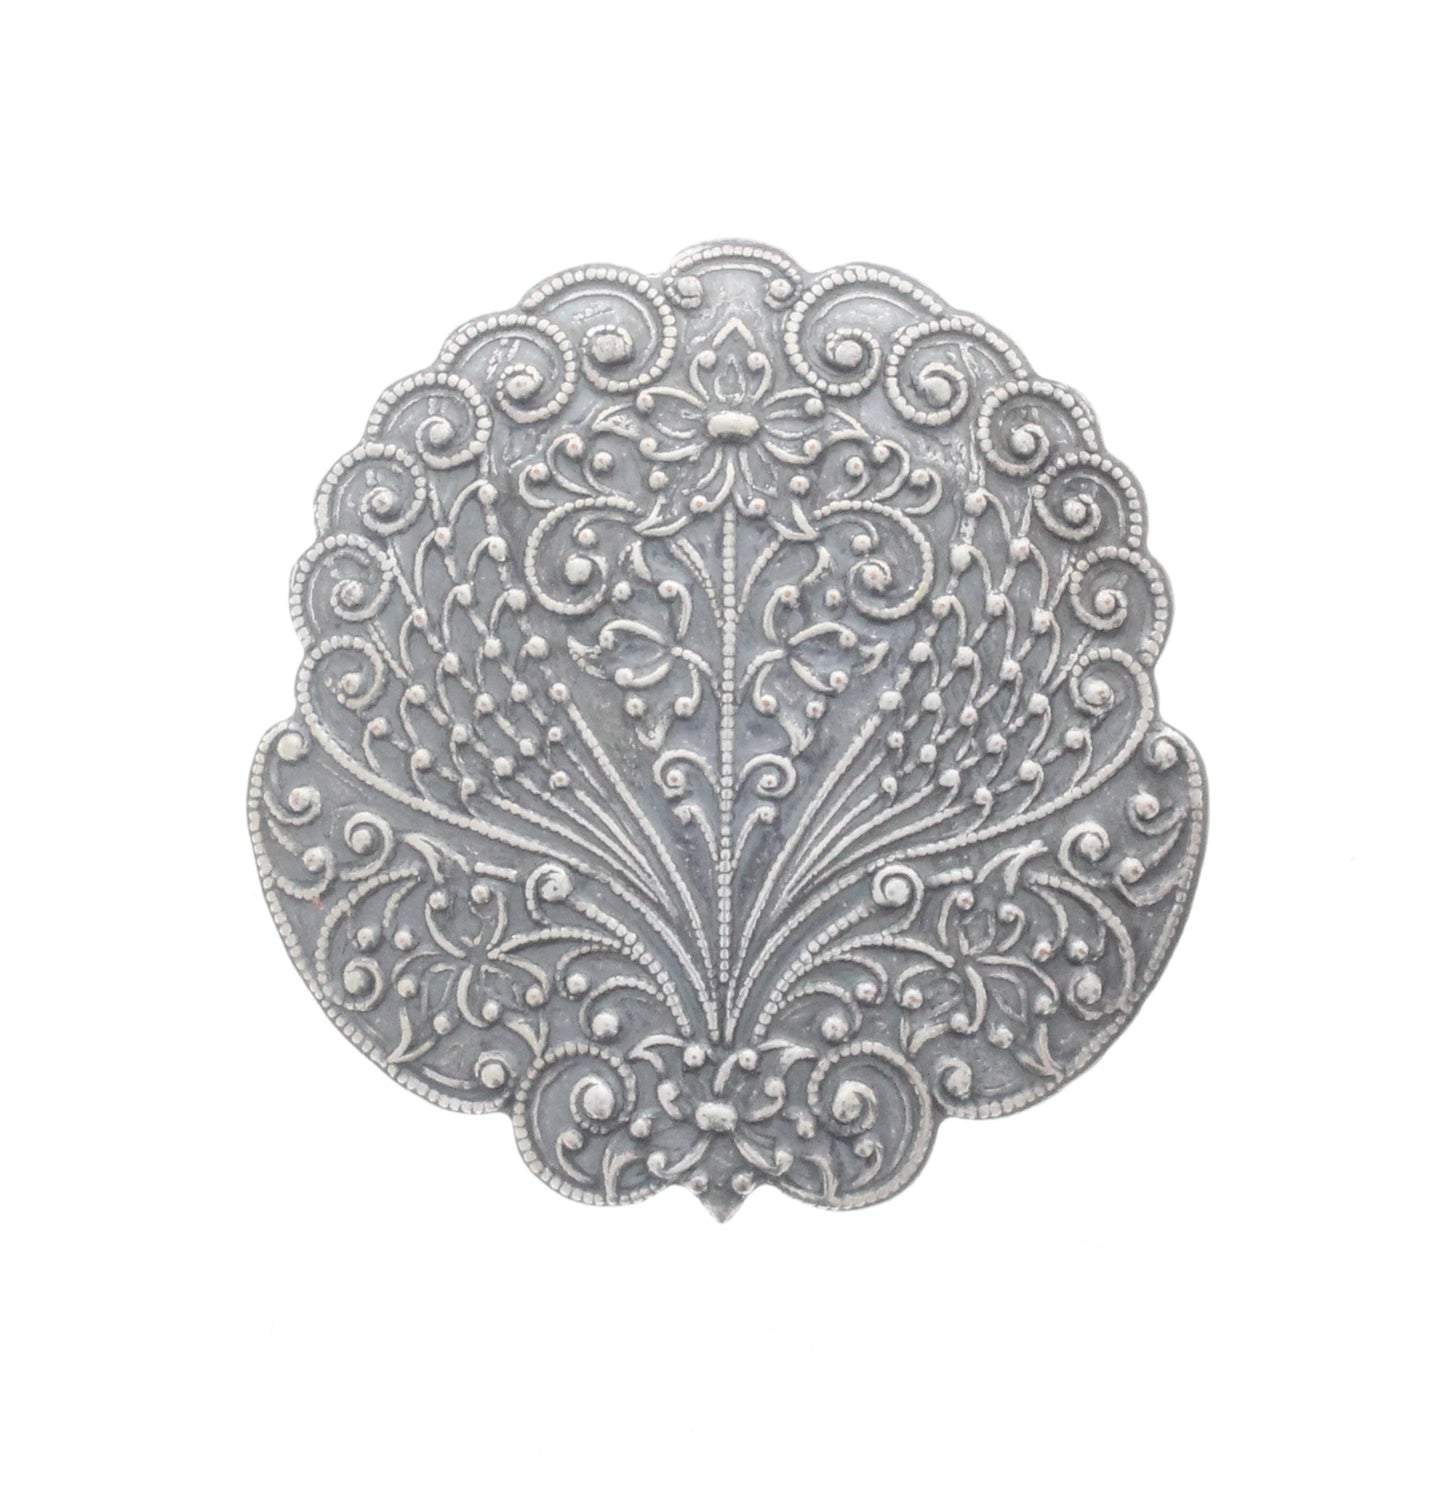 Floral Crest Medallion Charm, Pk/6